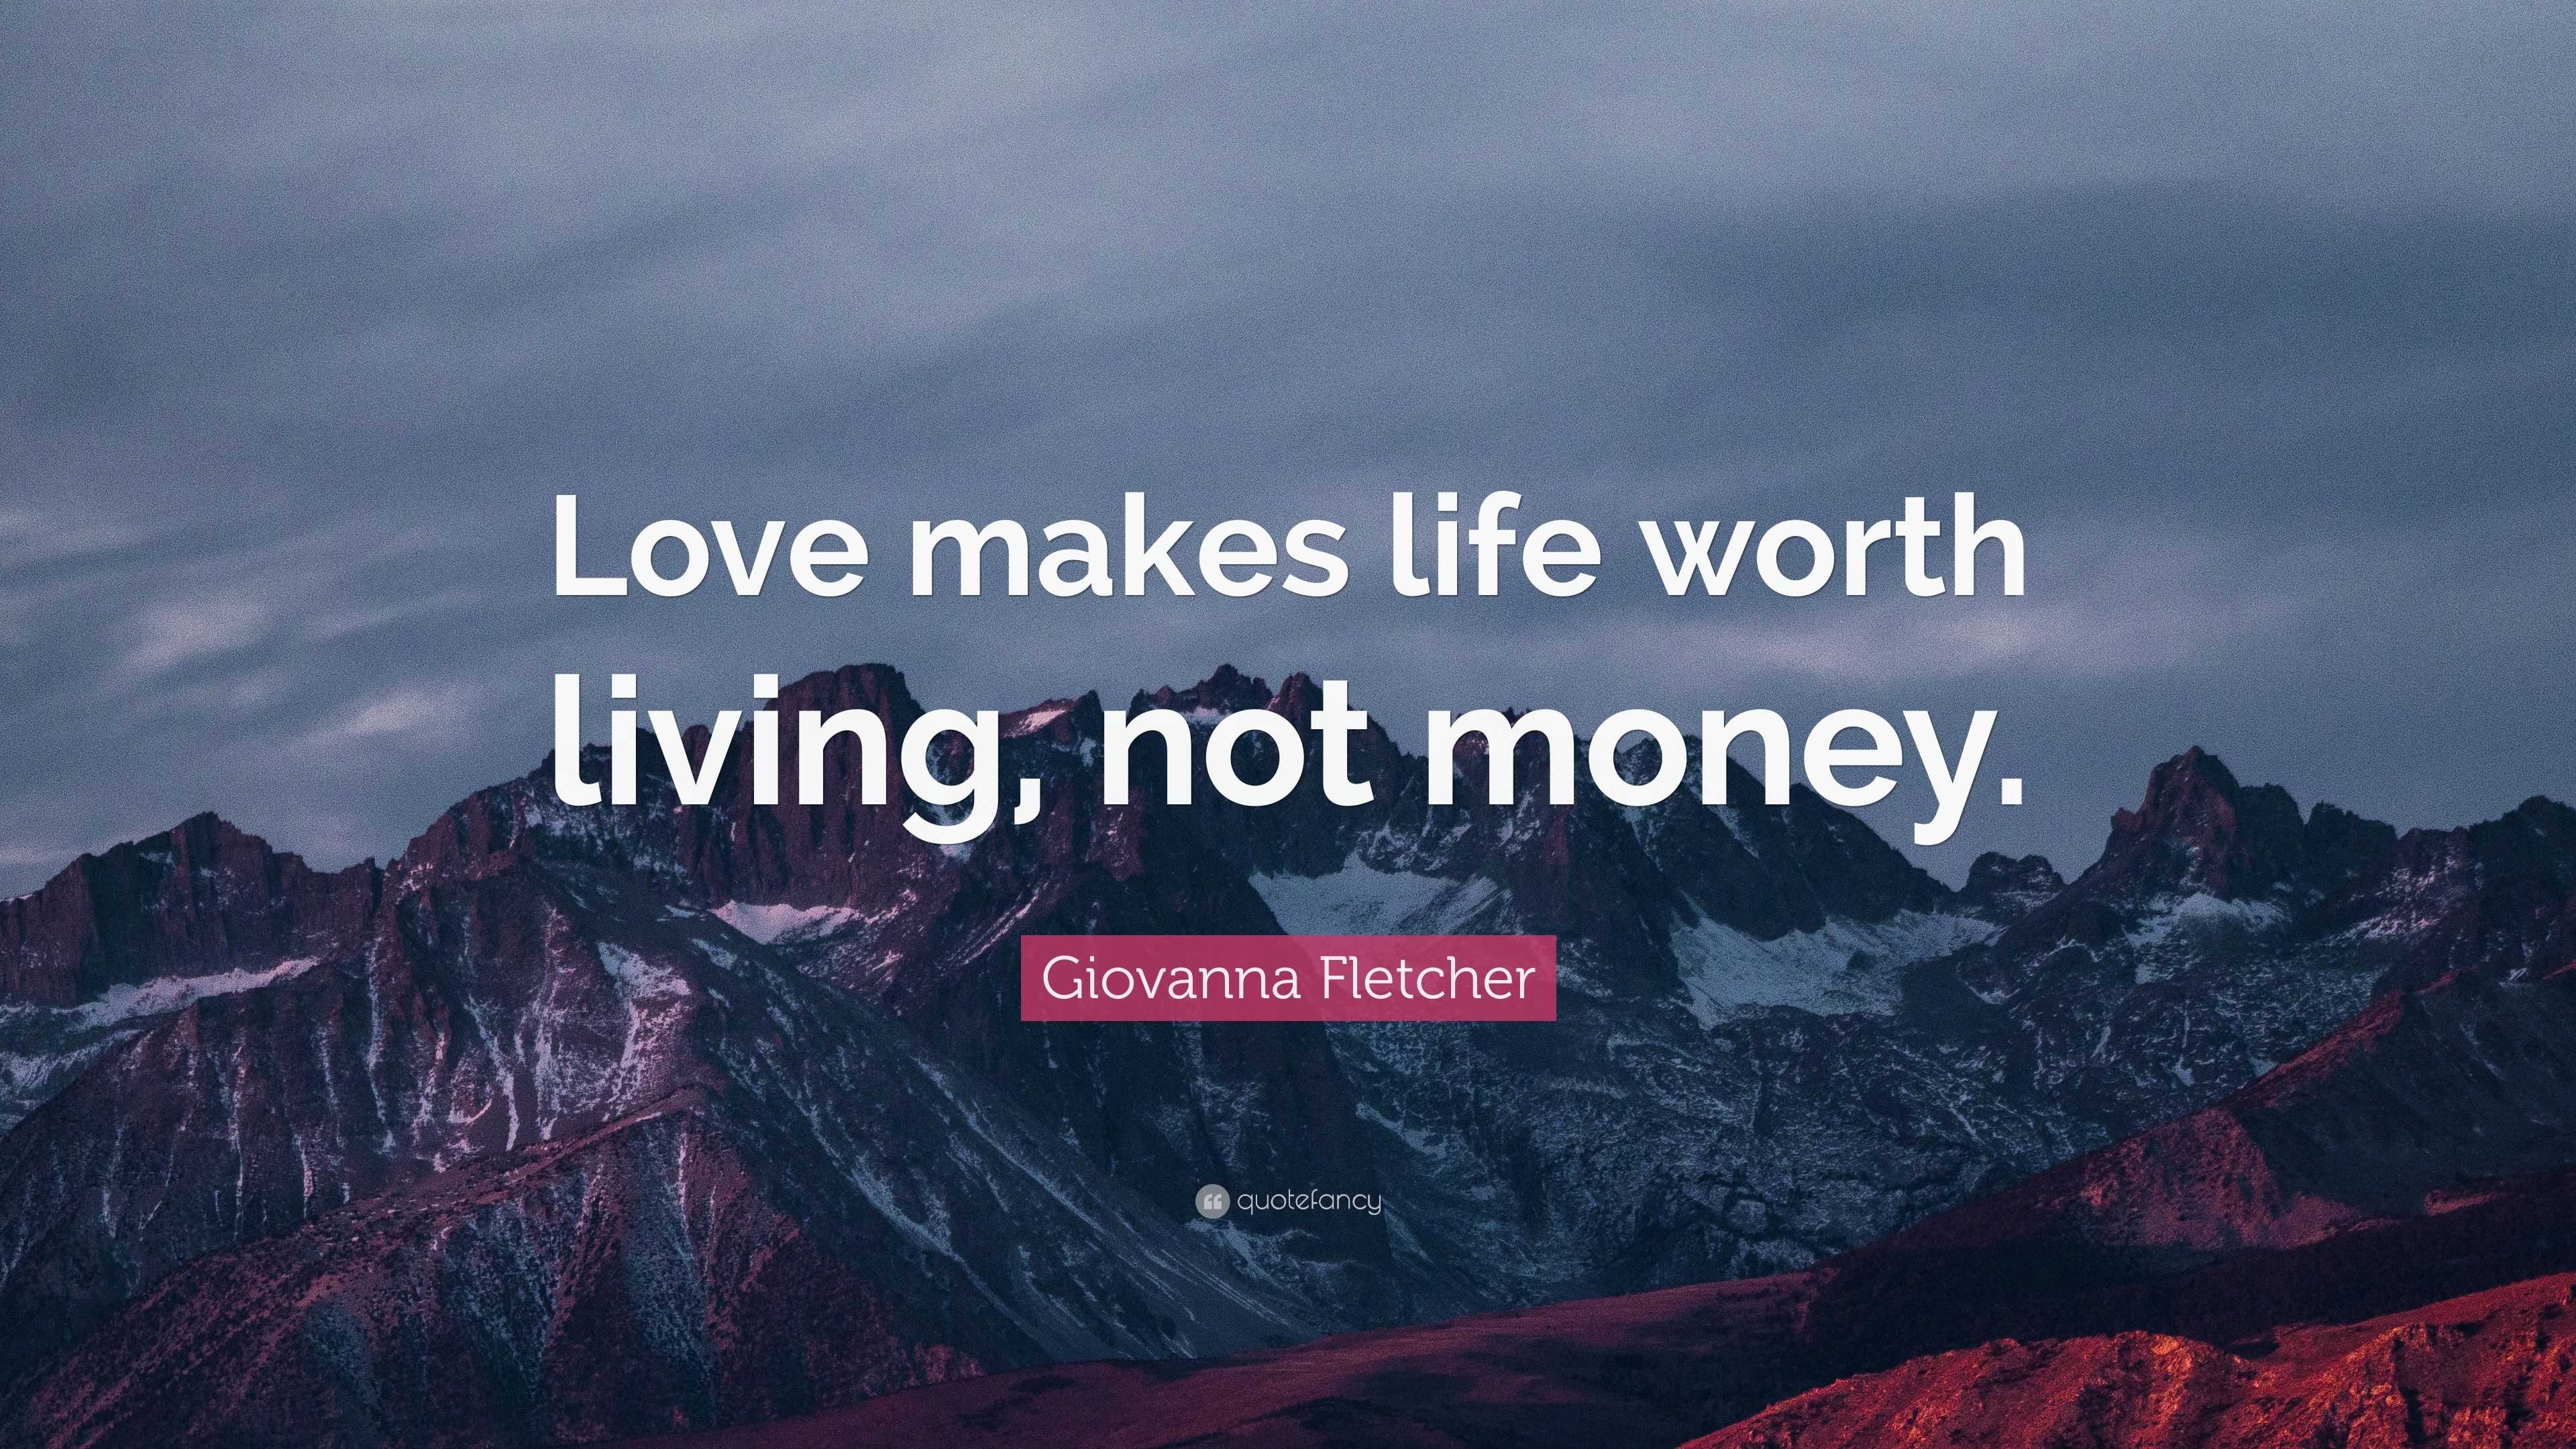 Giovanna Fletcher Quote “Love makes life worth living not money ”